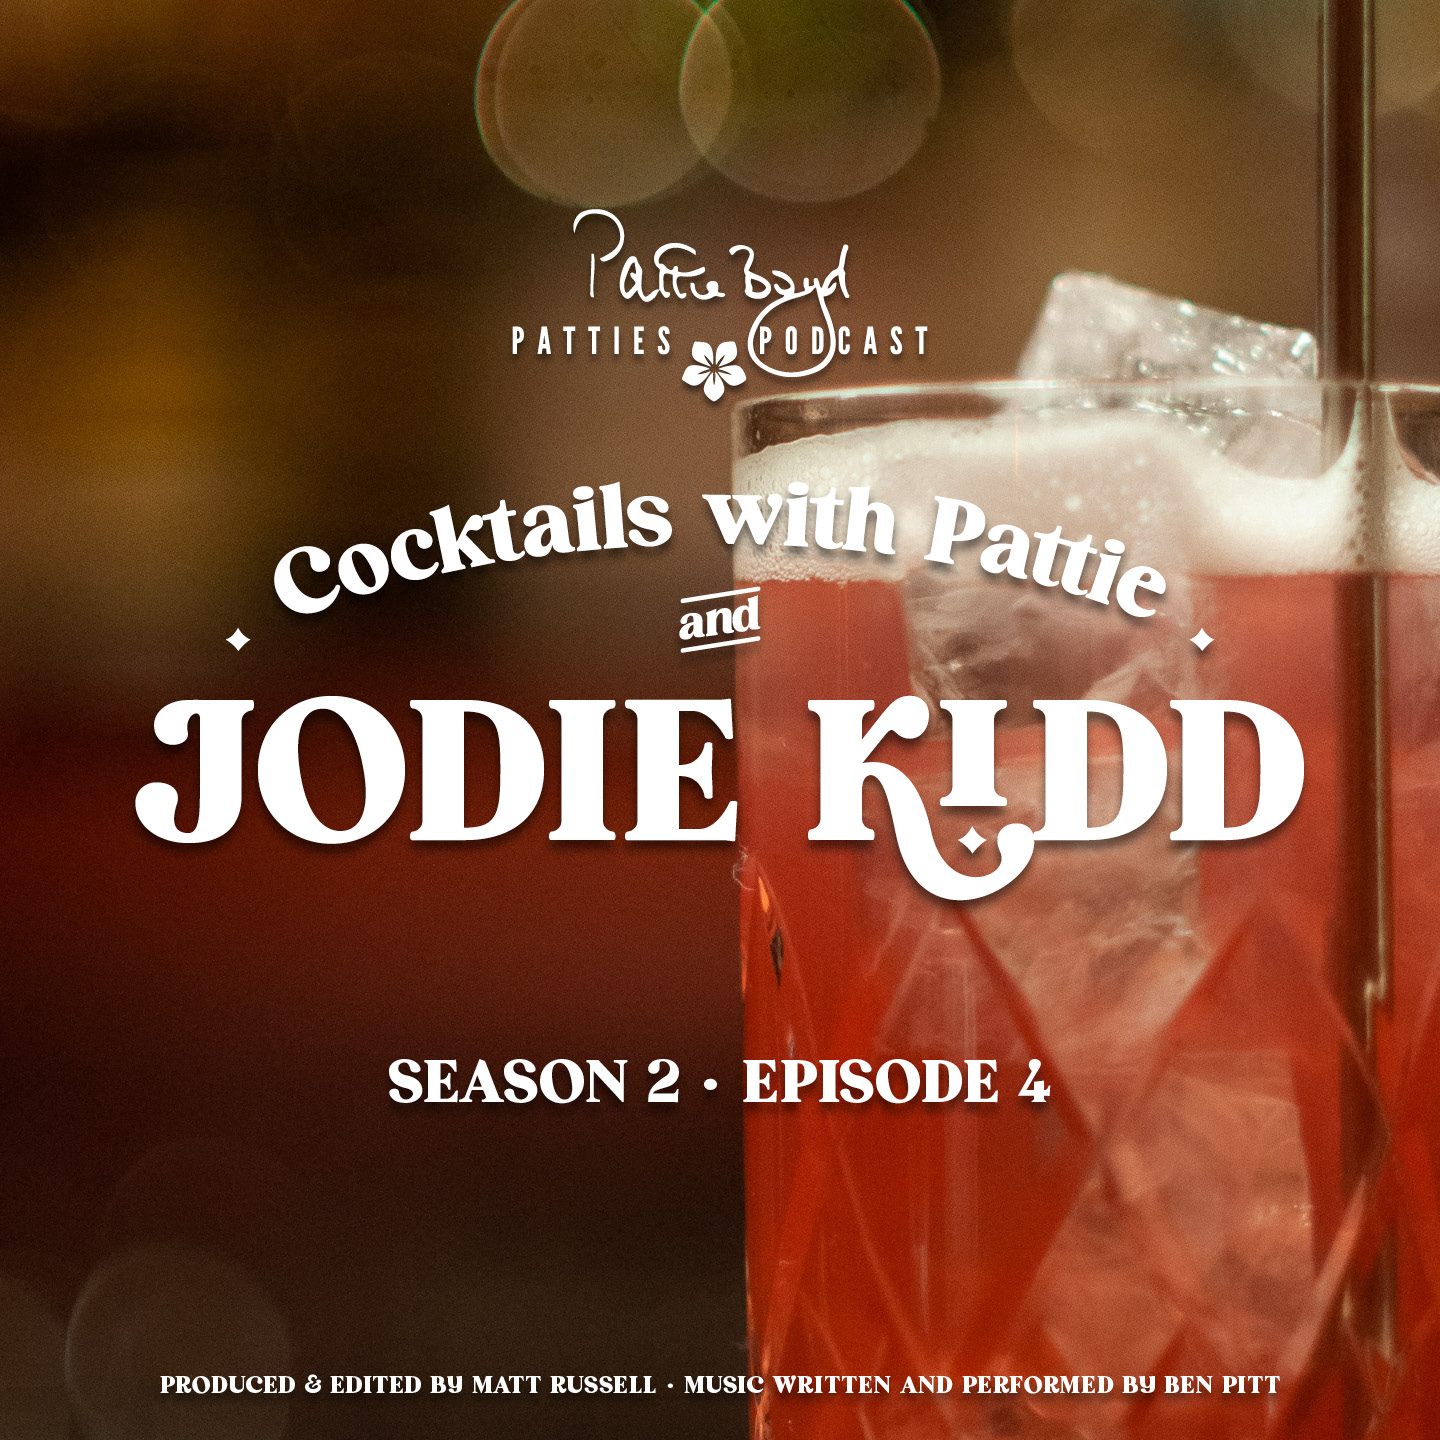 S2E4-Jodie-Kidd